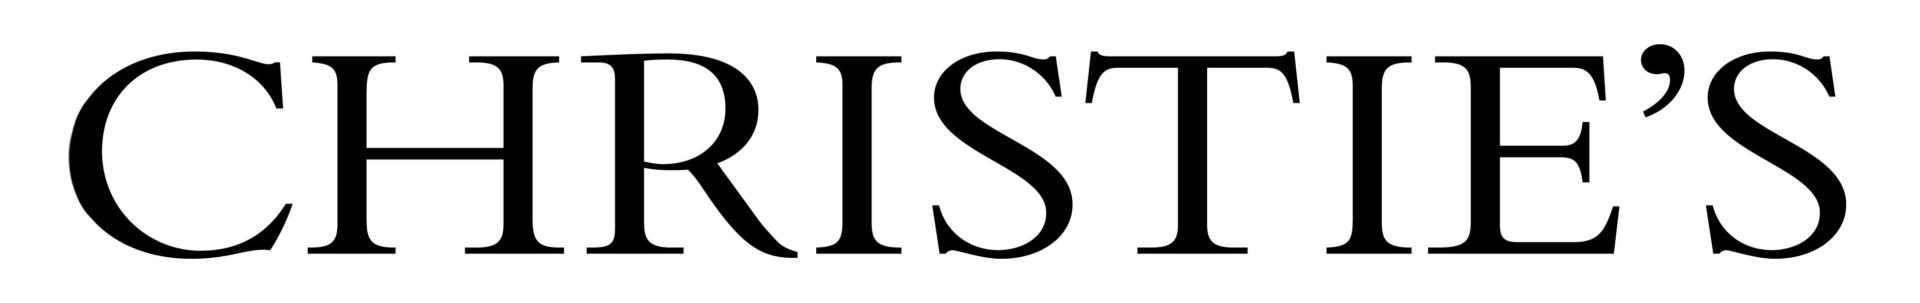 Christie's logo